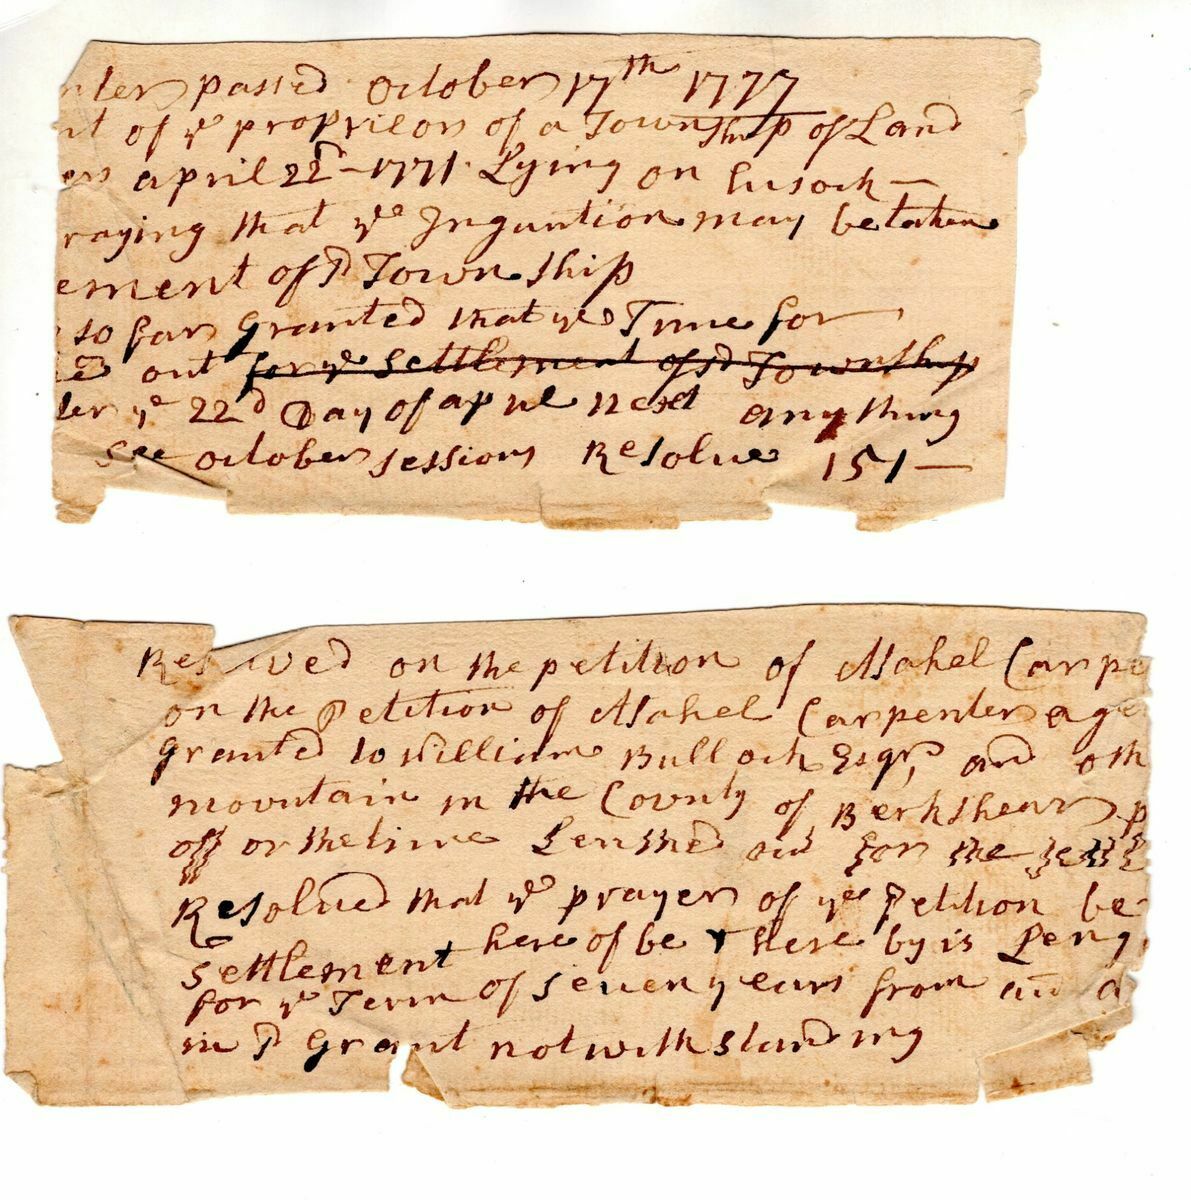 Historically Important Manuscript Regarding Savoy, Massachusetts, 1777